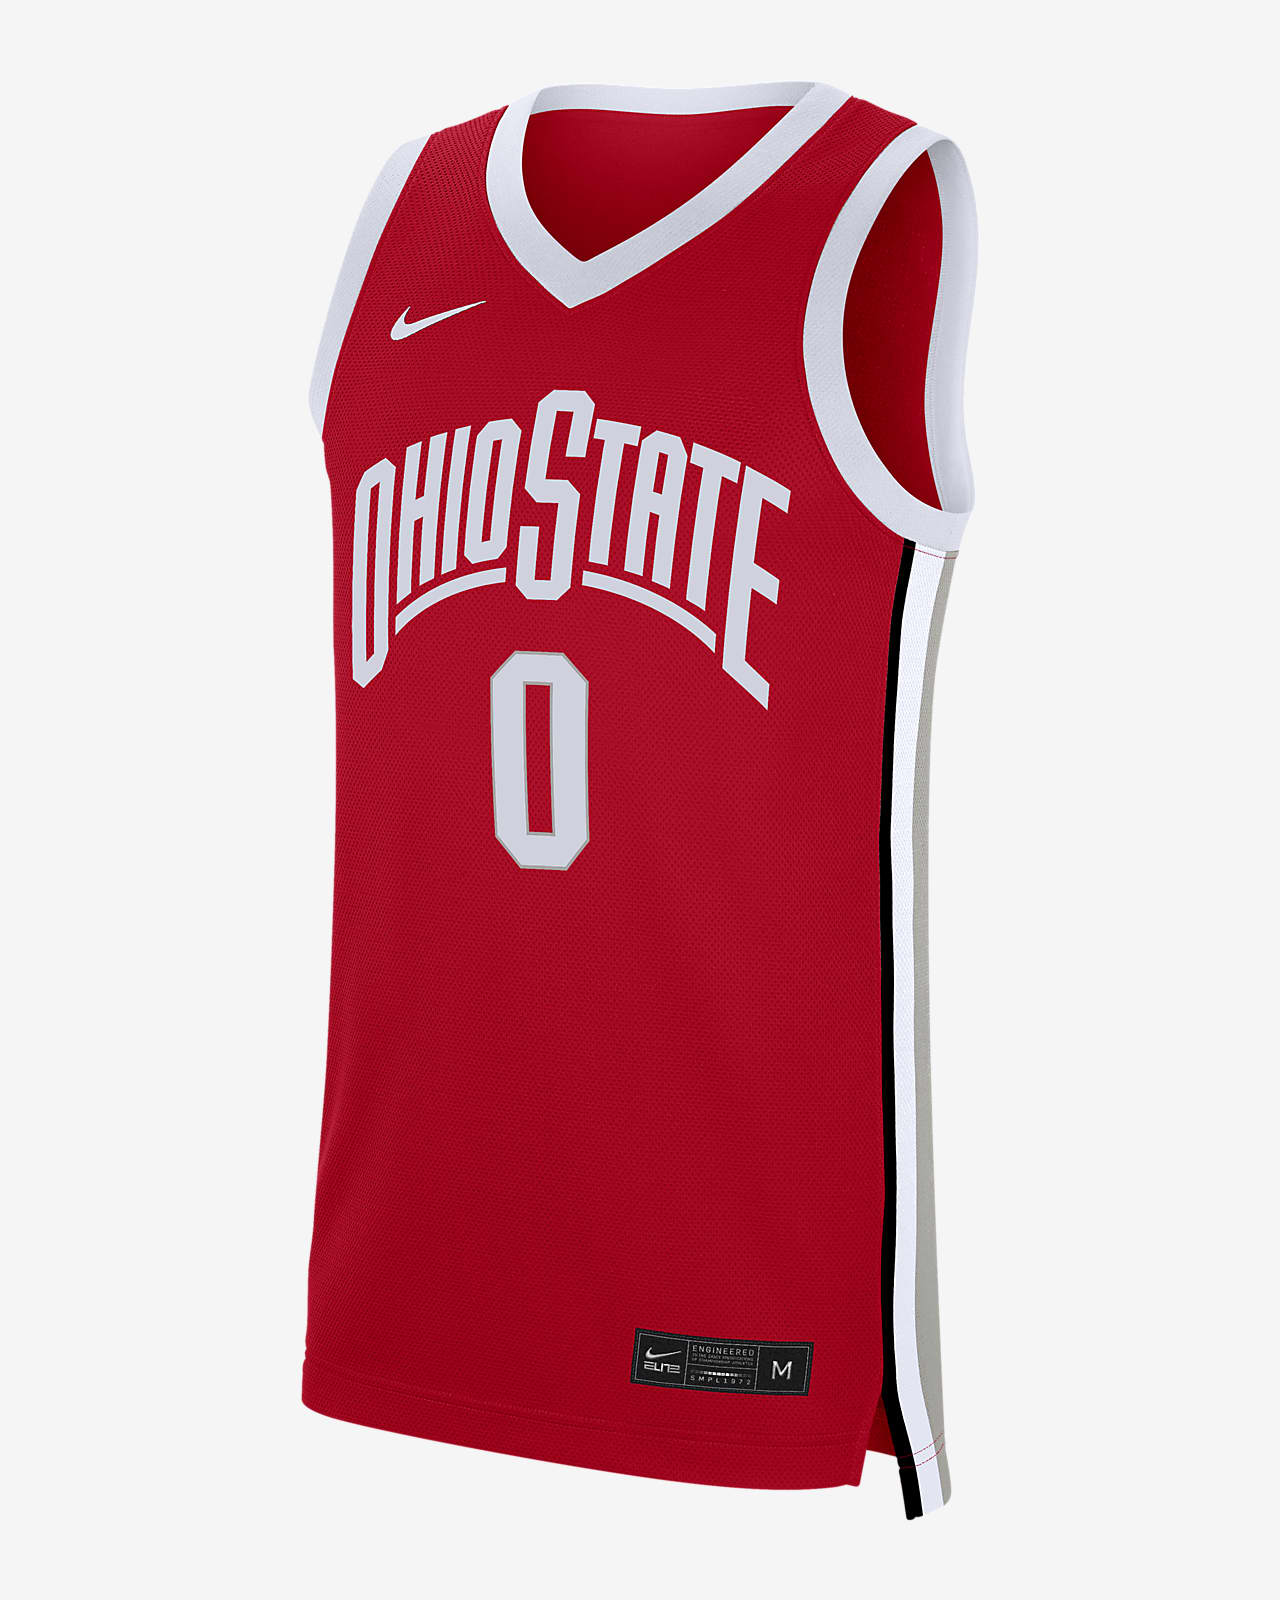 Nike College Replica (Ohio State) Men's Basketball Jersey